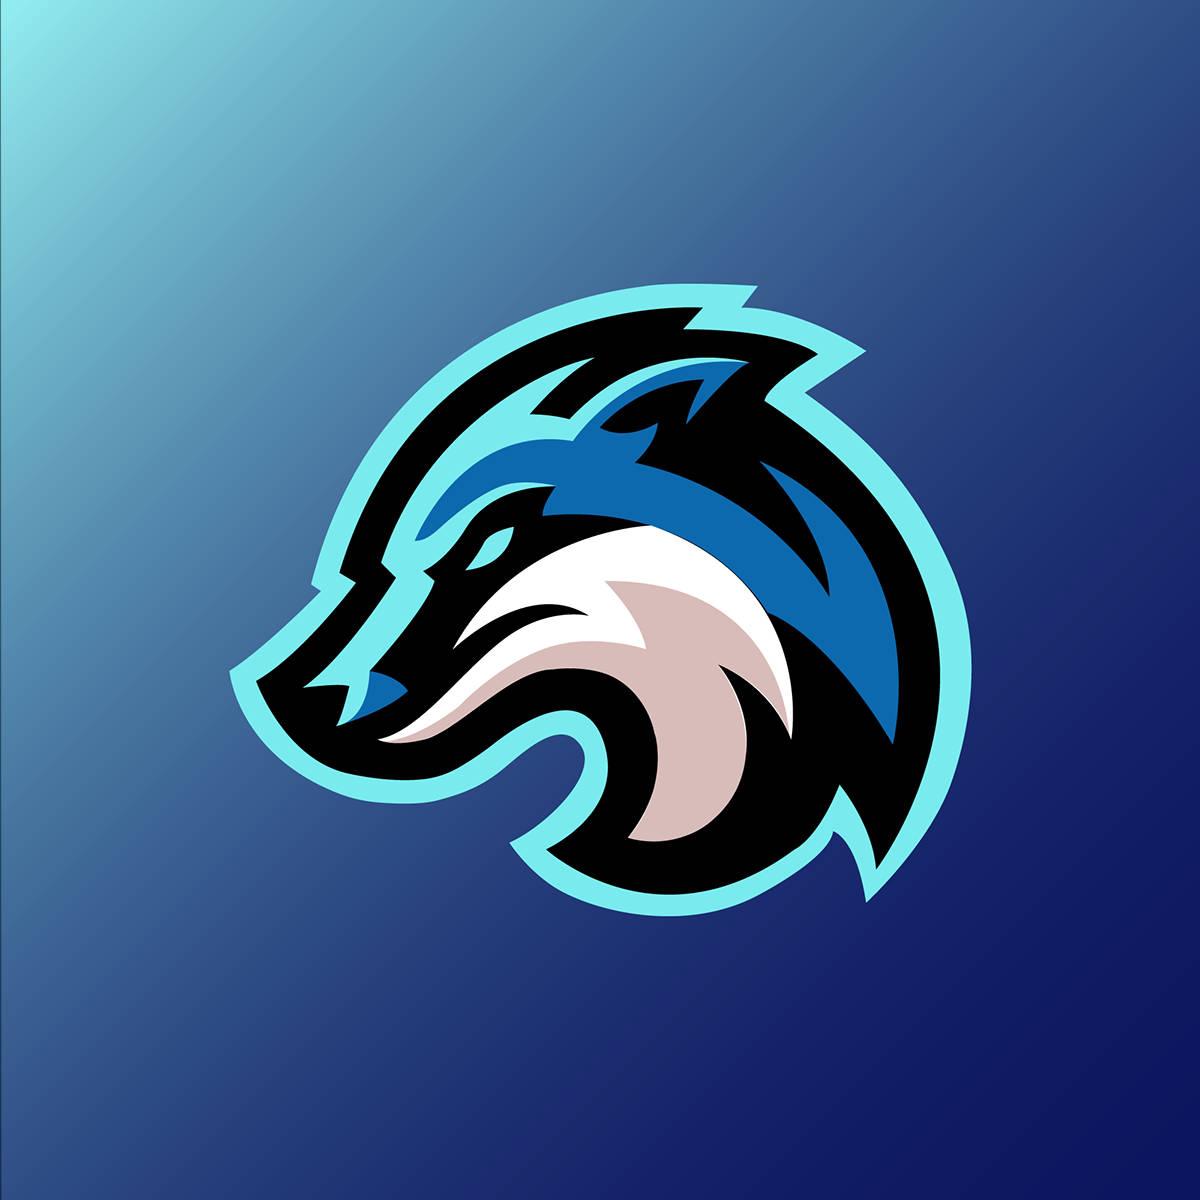 Caption: Stunning Blue Wolf Digital Logo